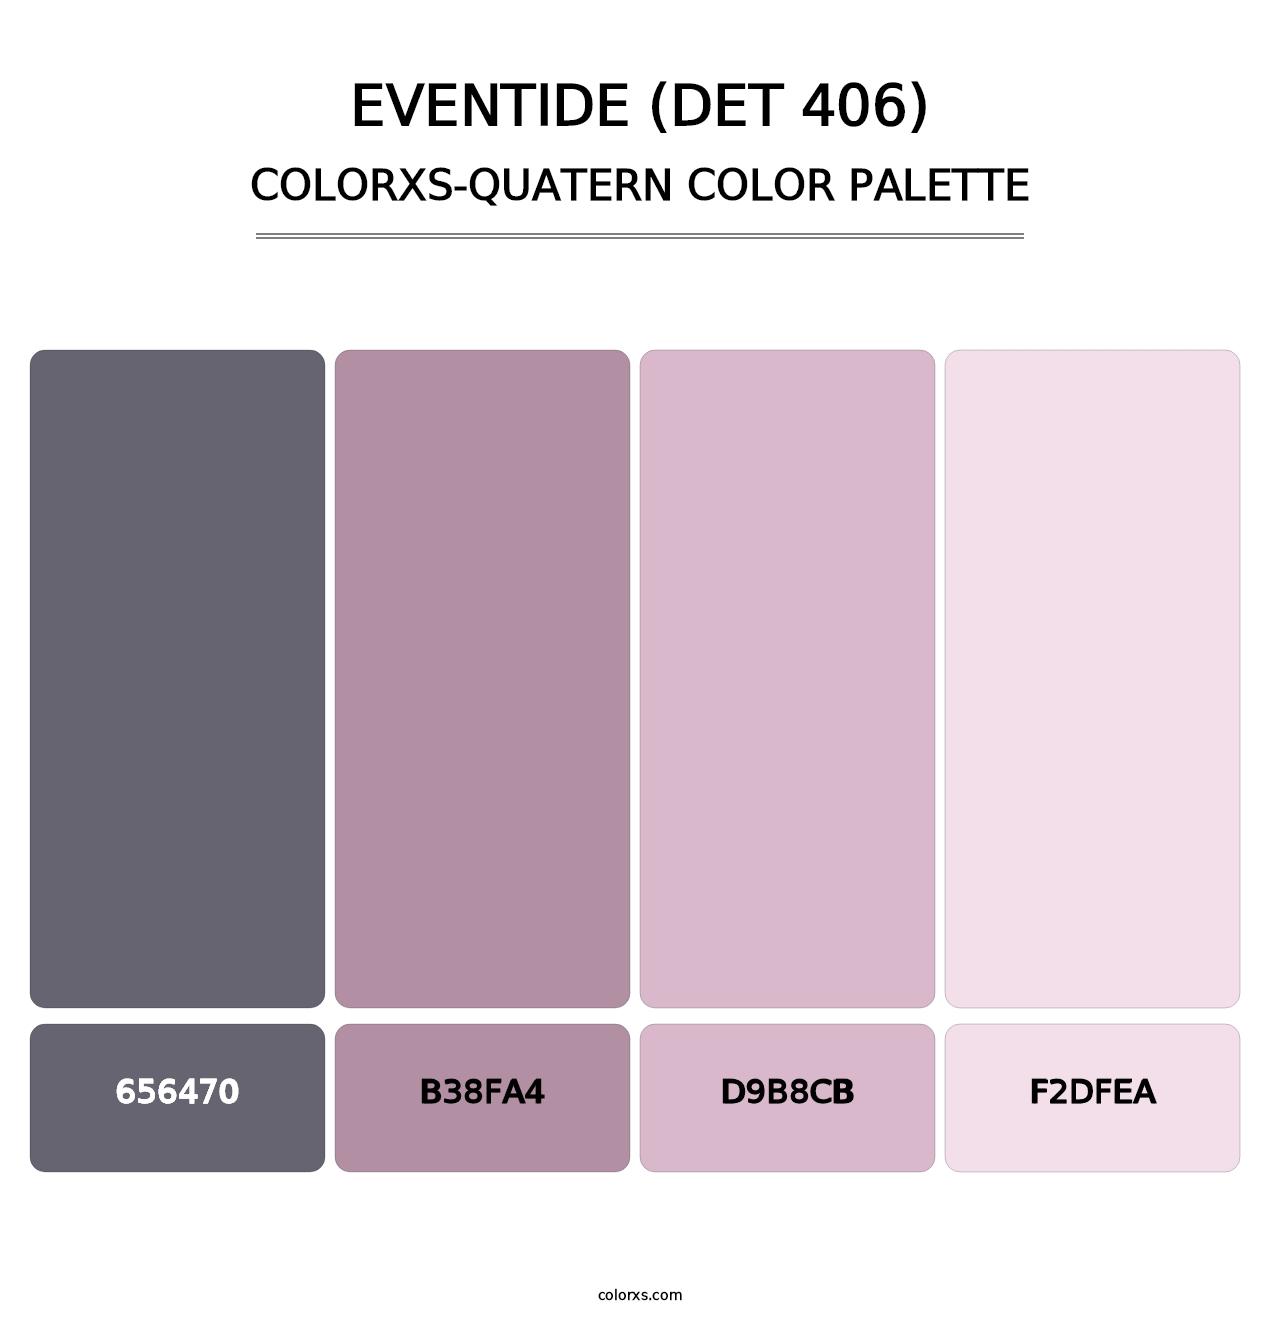 Eventide (DET 406) - Colorxs Quatern Palette